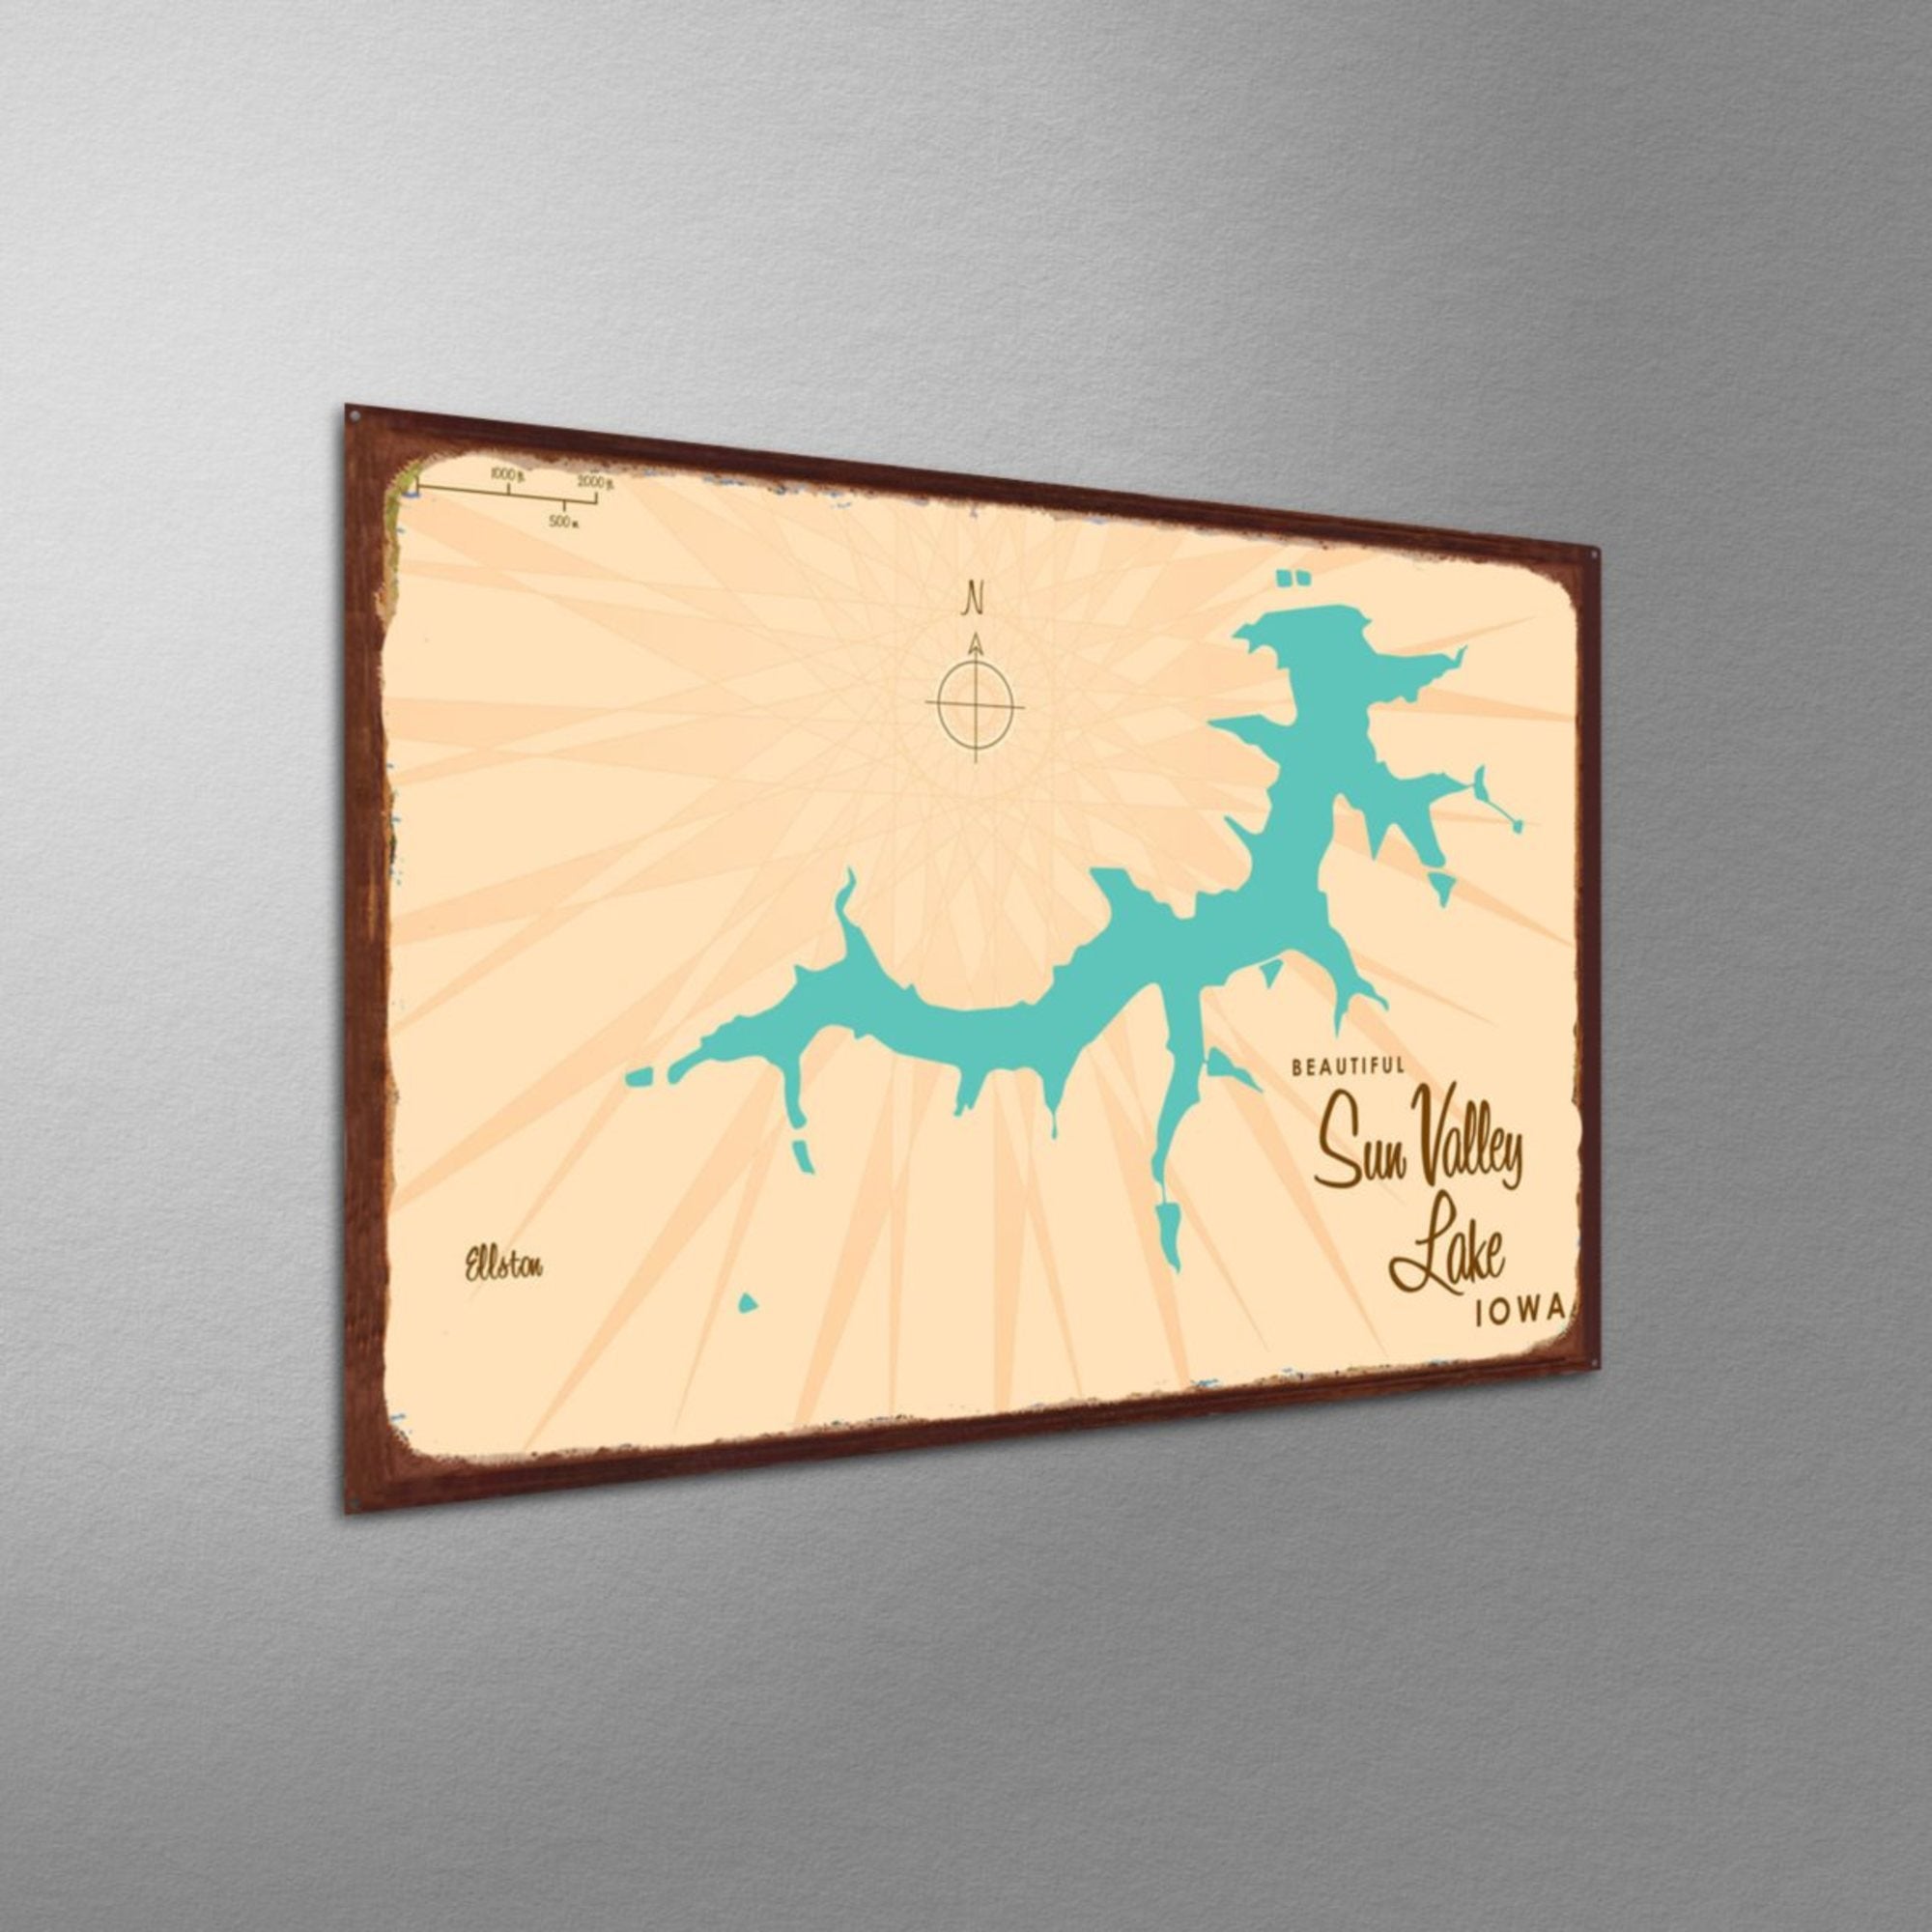 Sun Valley Lake Iowa, Rustic Metal Sign Map Art